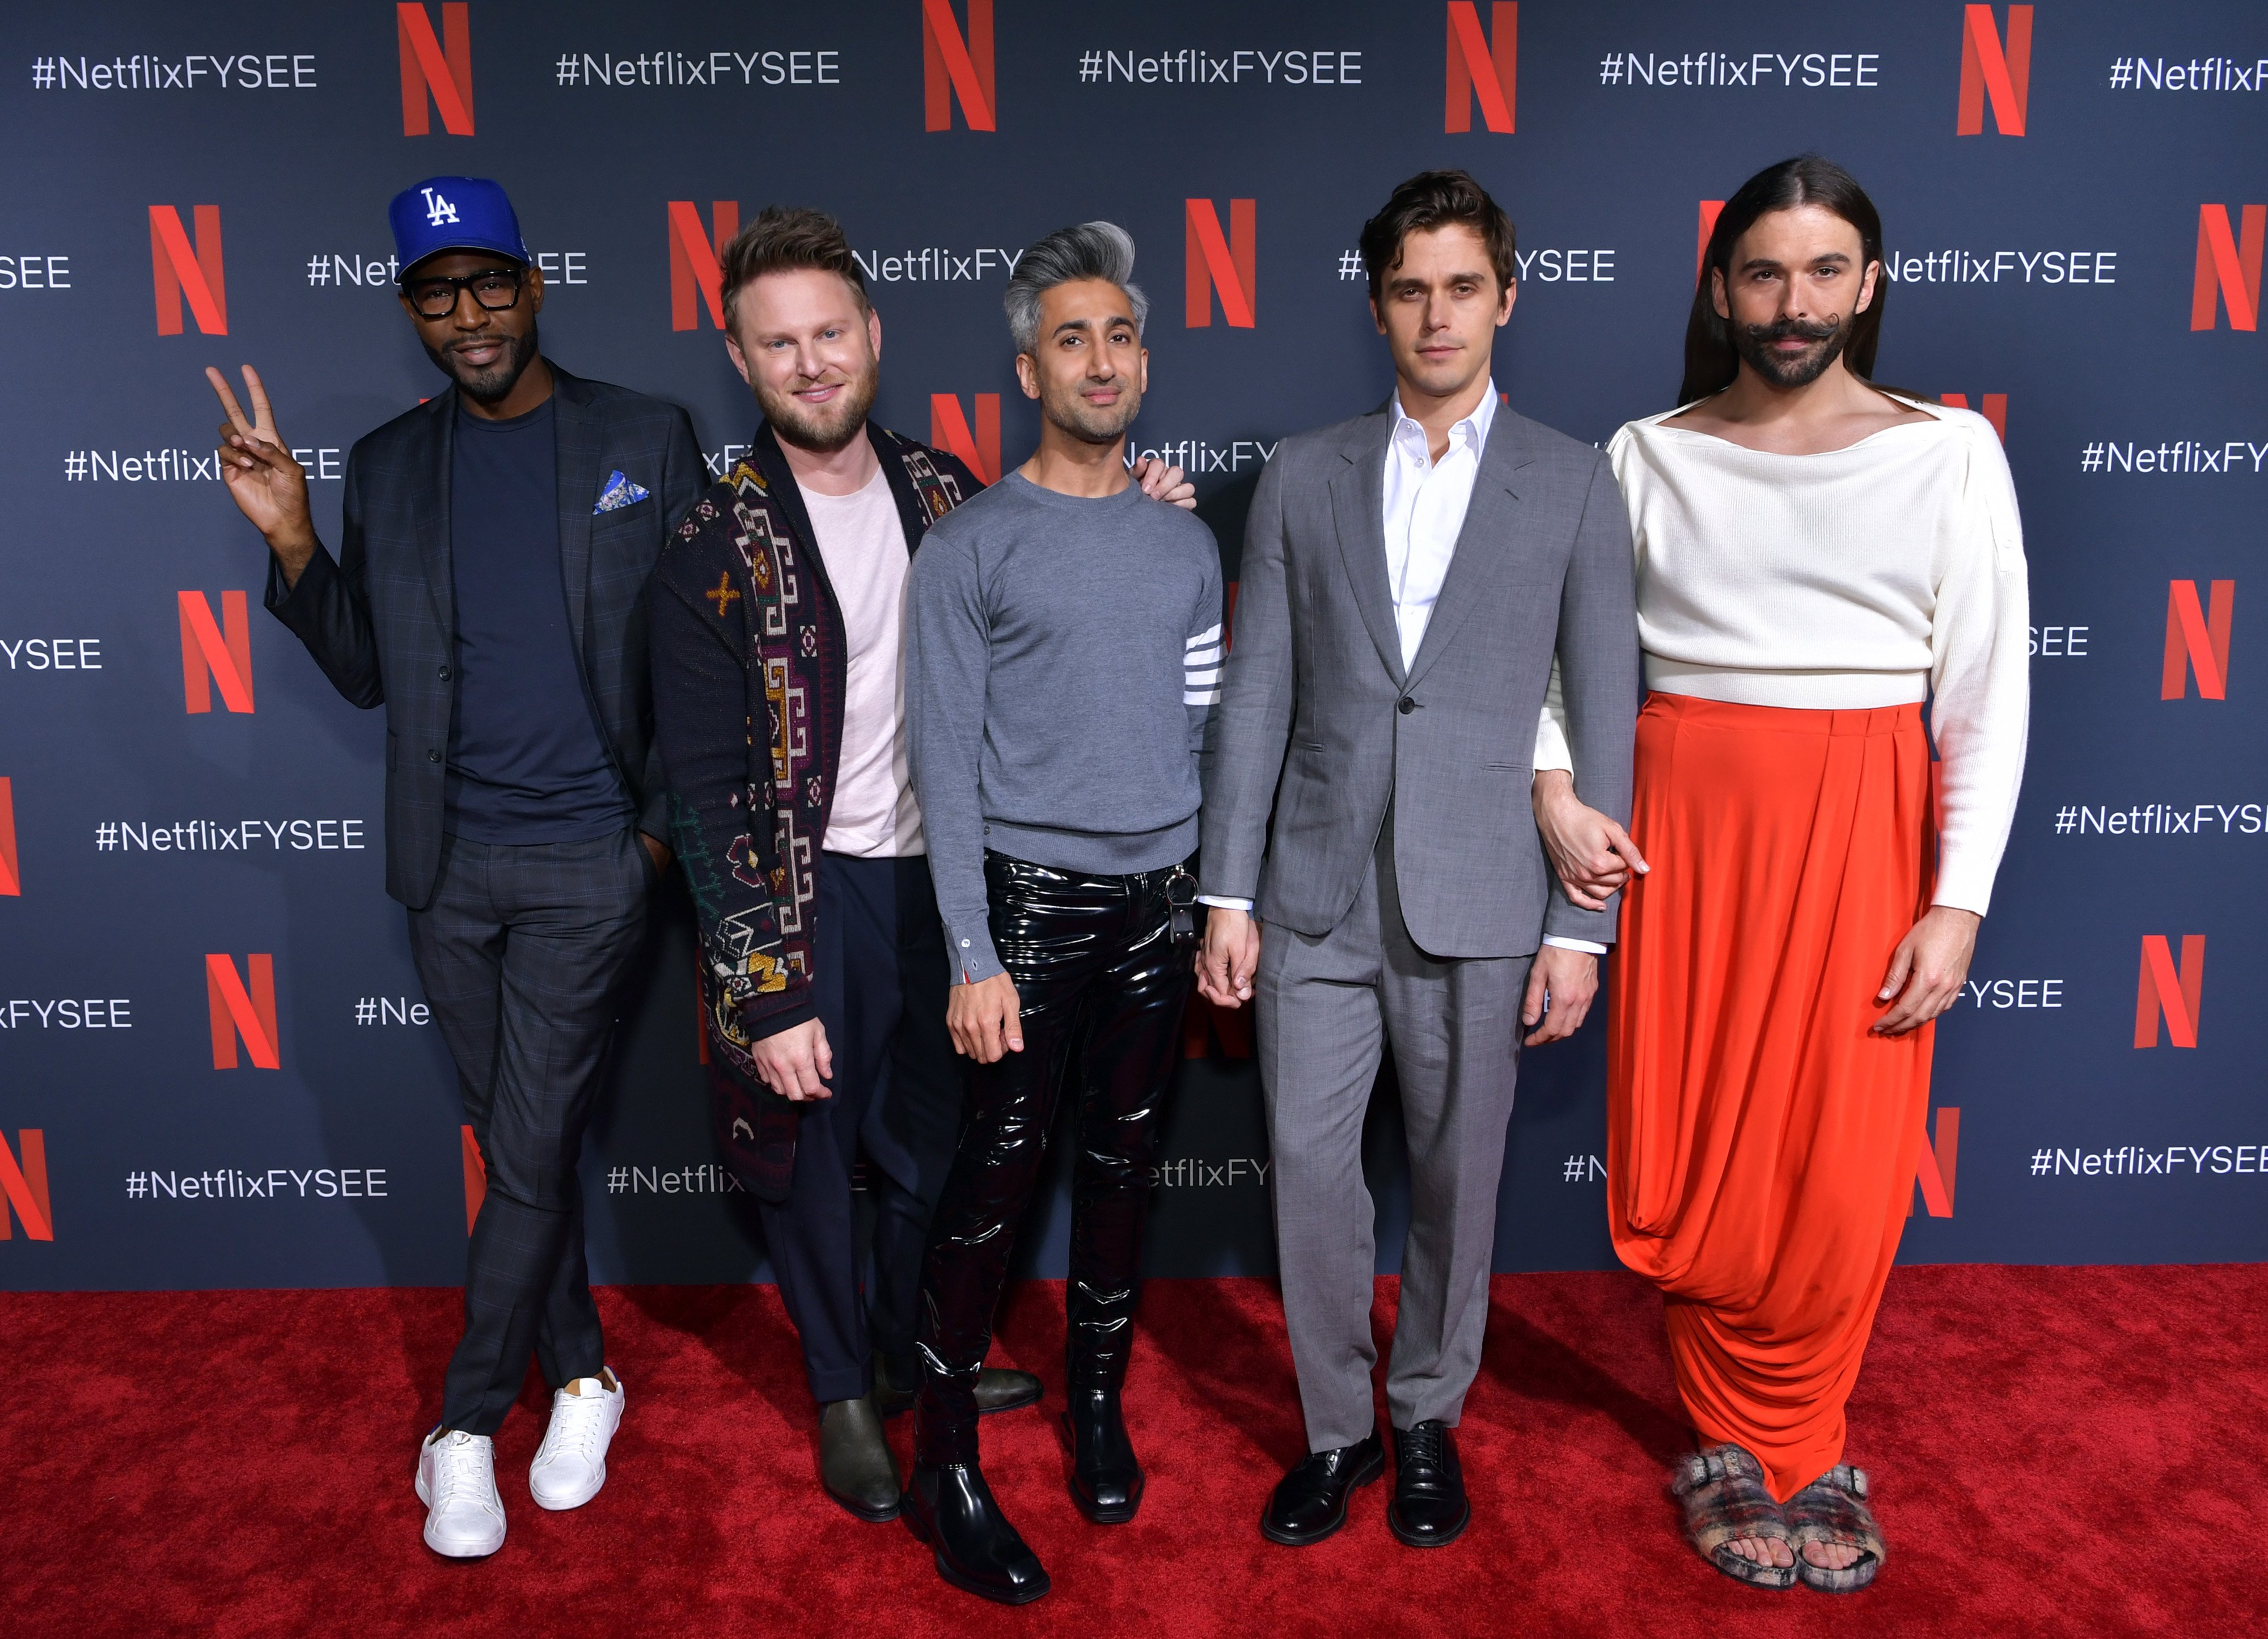 Karamo Brown, Bobby Berk, Tan France, Antoni Porowski, and Jonathan Van Ness attend the Netflix FYSEE 'Queer Eye' panel